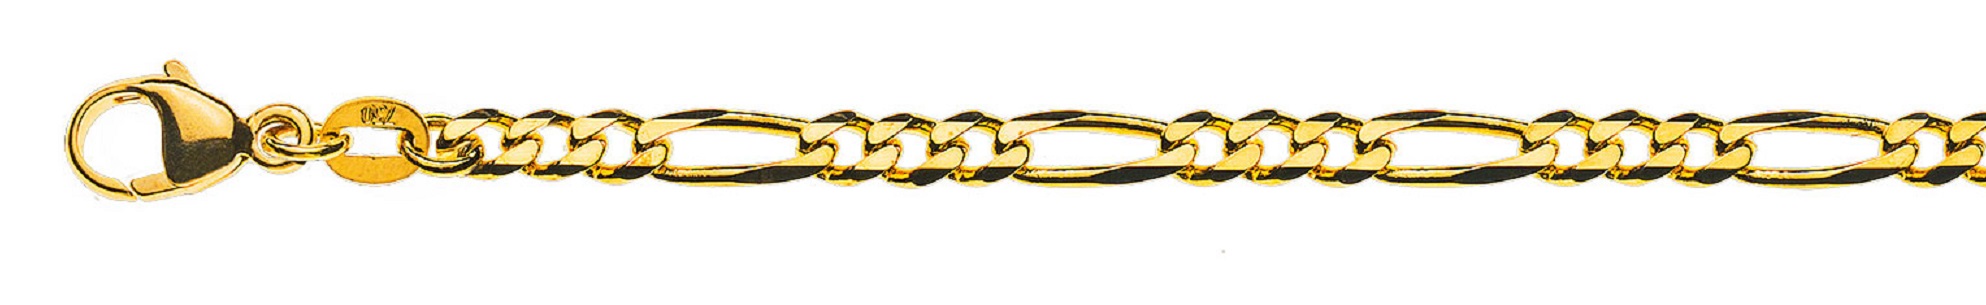 AURONOS Prestige Yellow gold 18K Figaro necklace 50cm 3.4mm